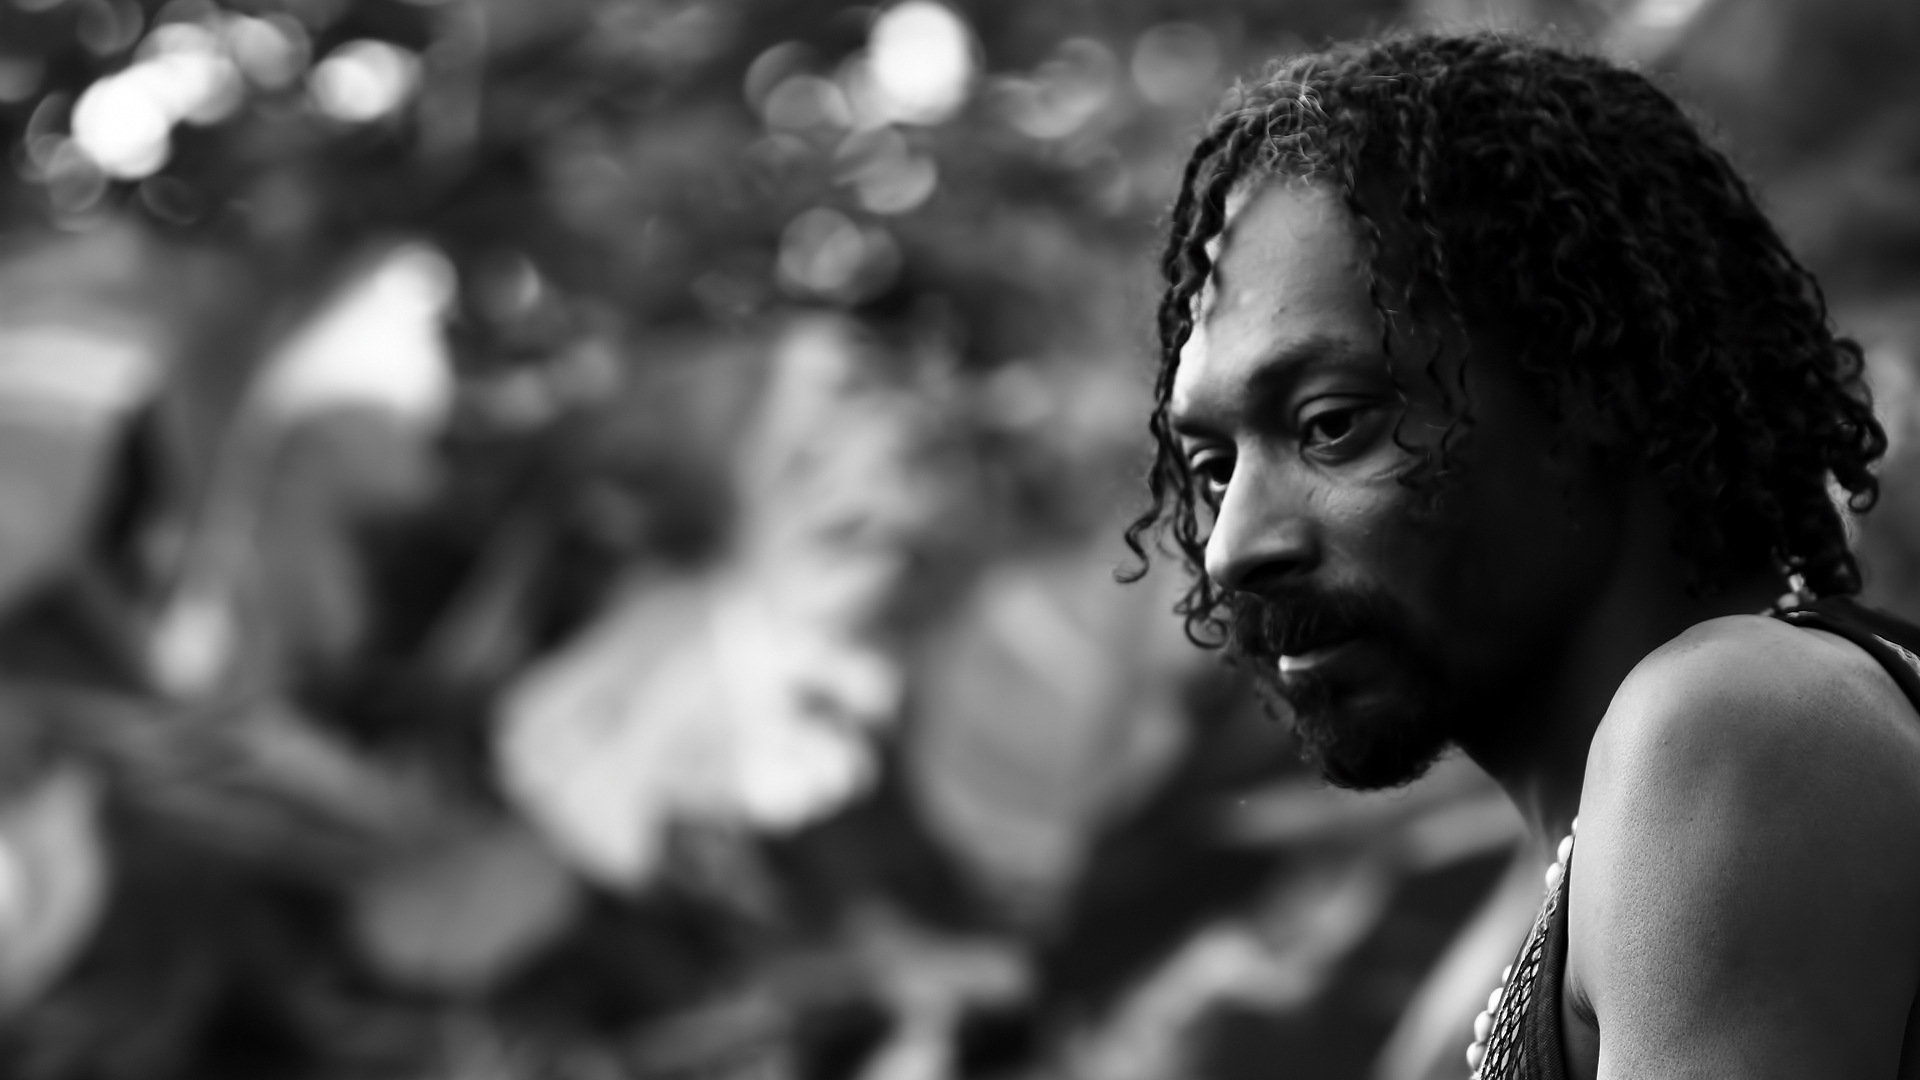 So Long av Snoop Lion